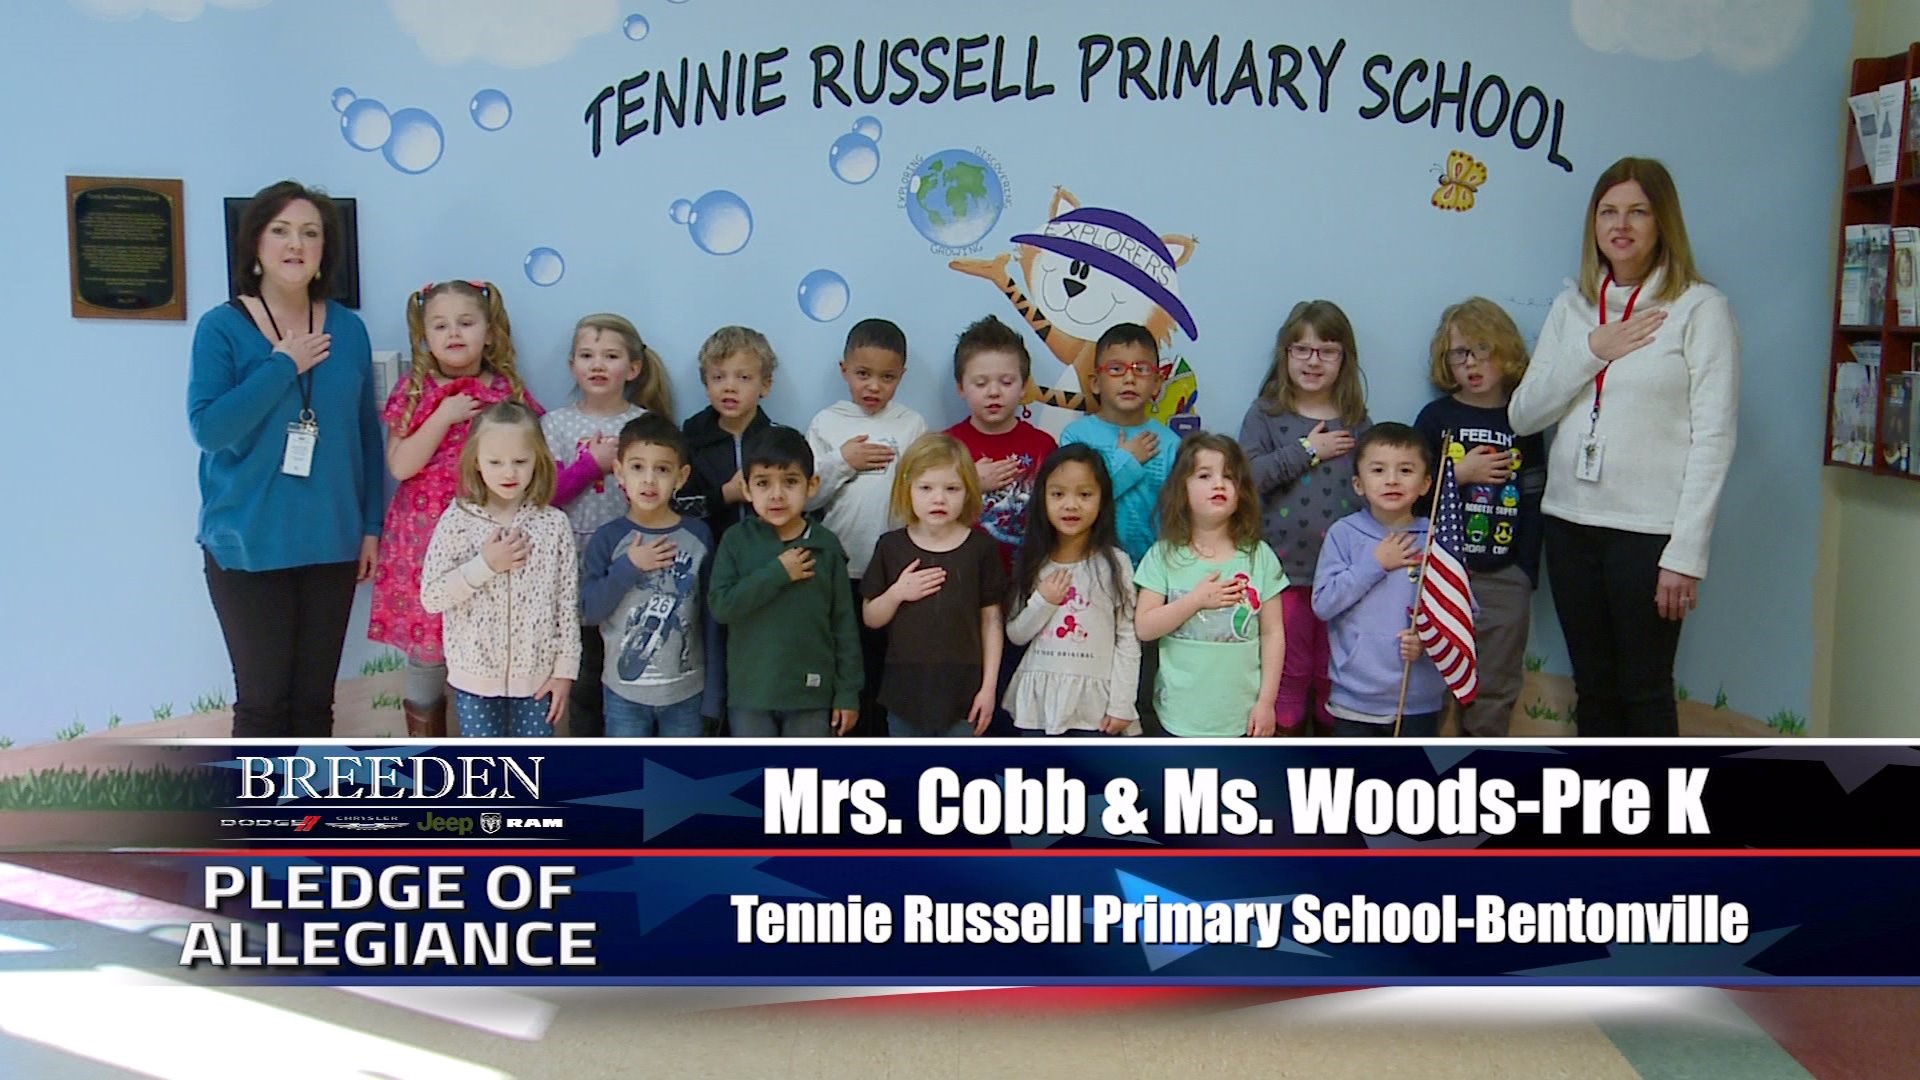 Mrs. Cobb & Ms. Woods  Pre K Tennie Russell Primary School, Bentonville